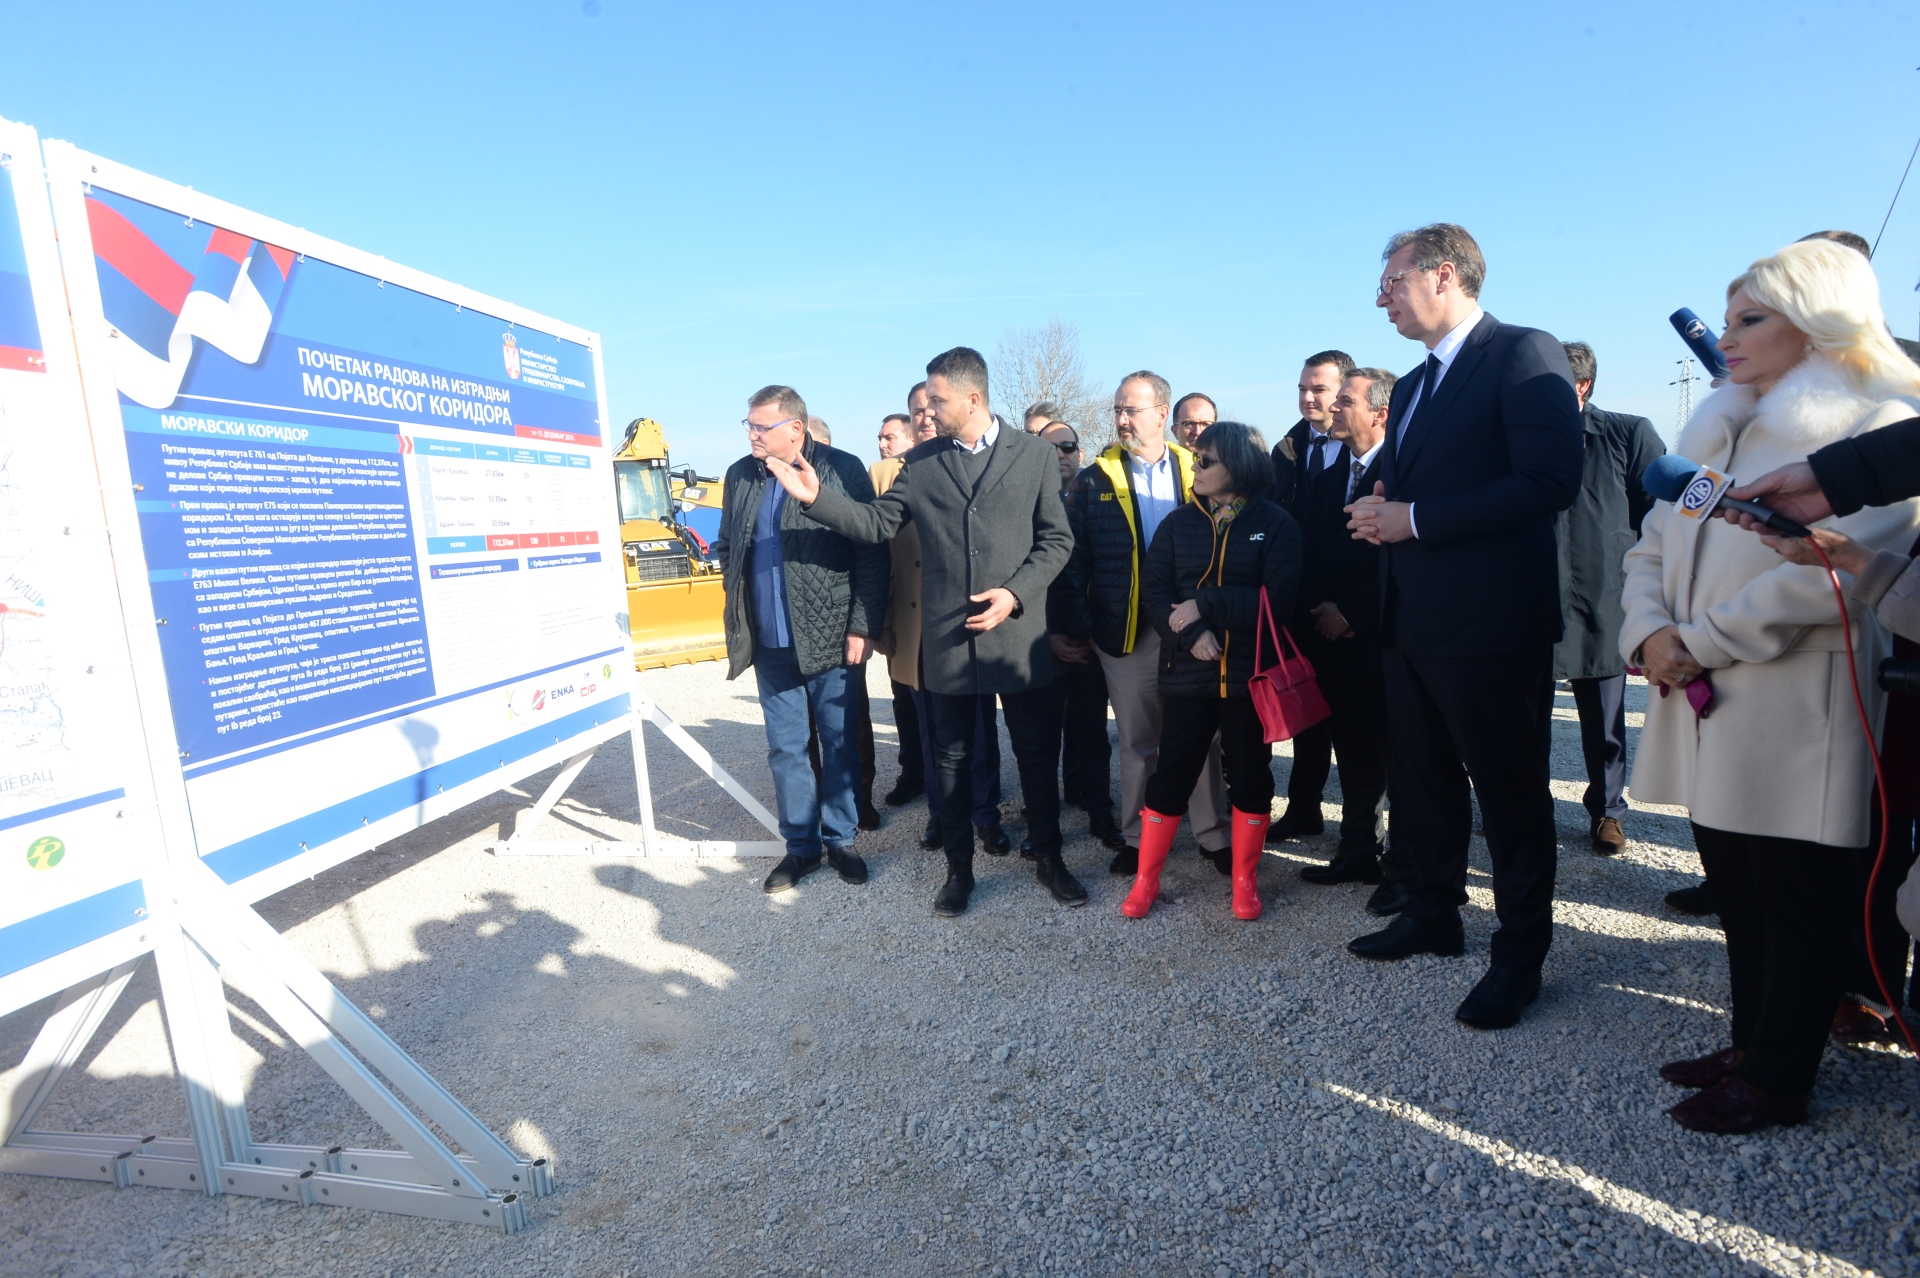 Predsednik Srbije Aleksandar Vucic na svecanom obelezavanju pocetka radova na Moravskom koridoru